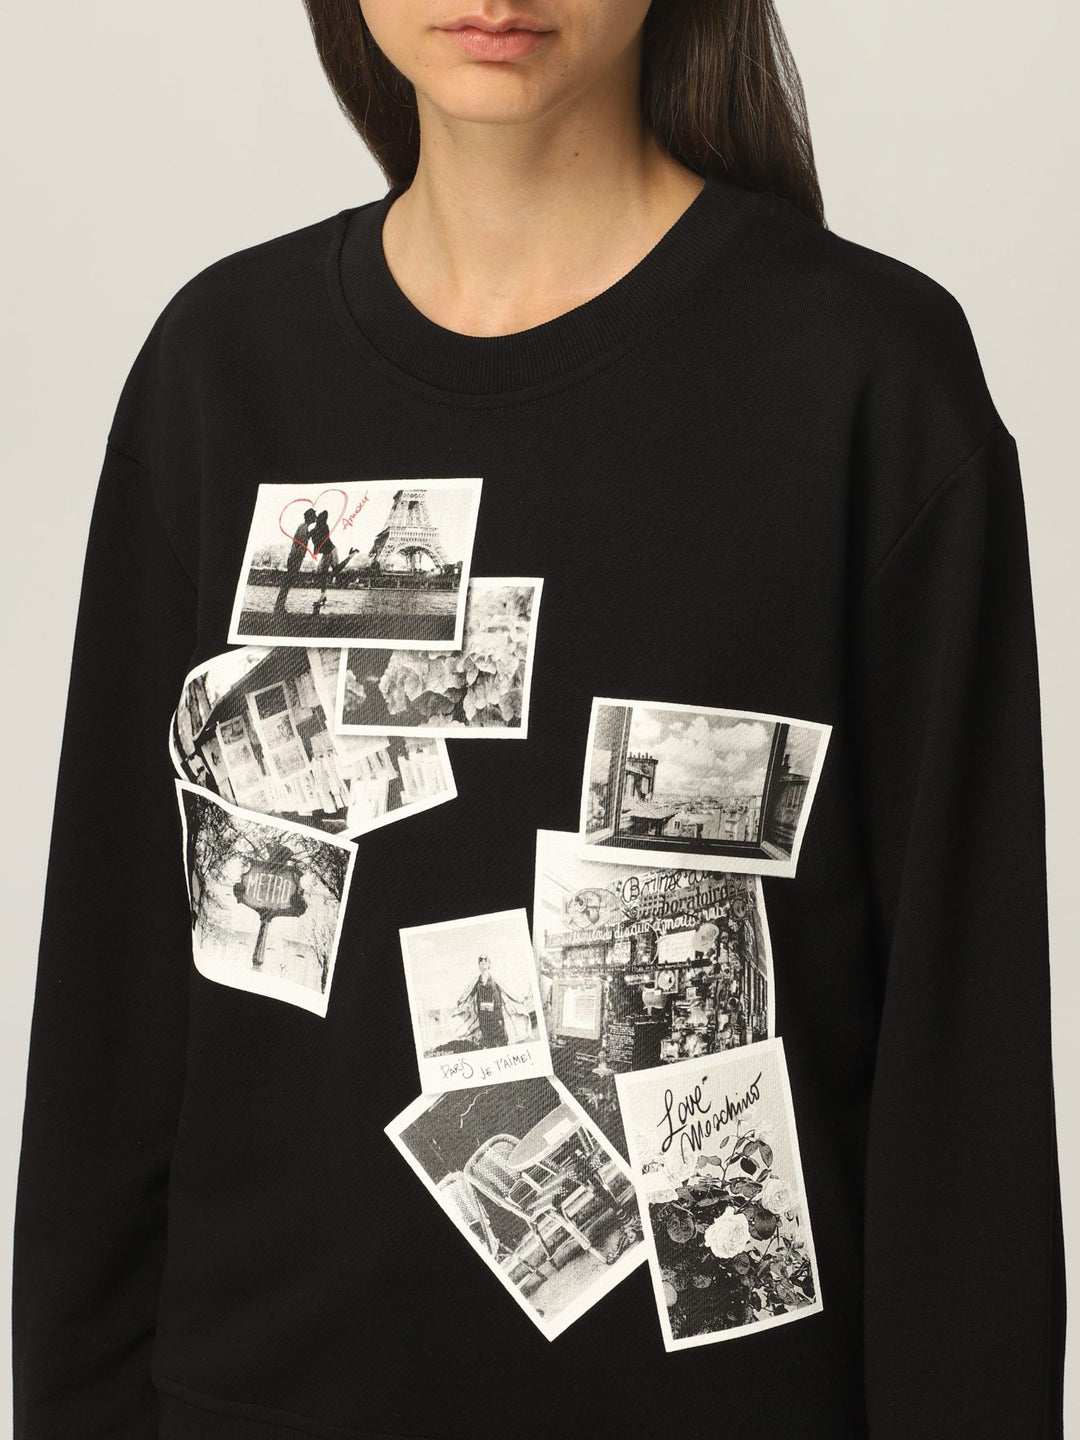 Love Moschino Chic Black Sweatshirt with Designer Emblem